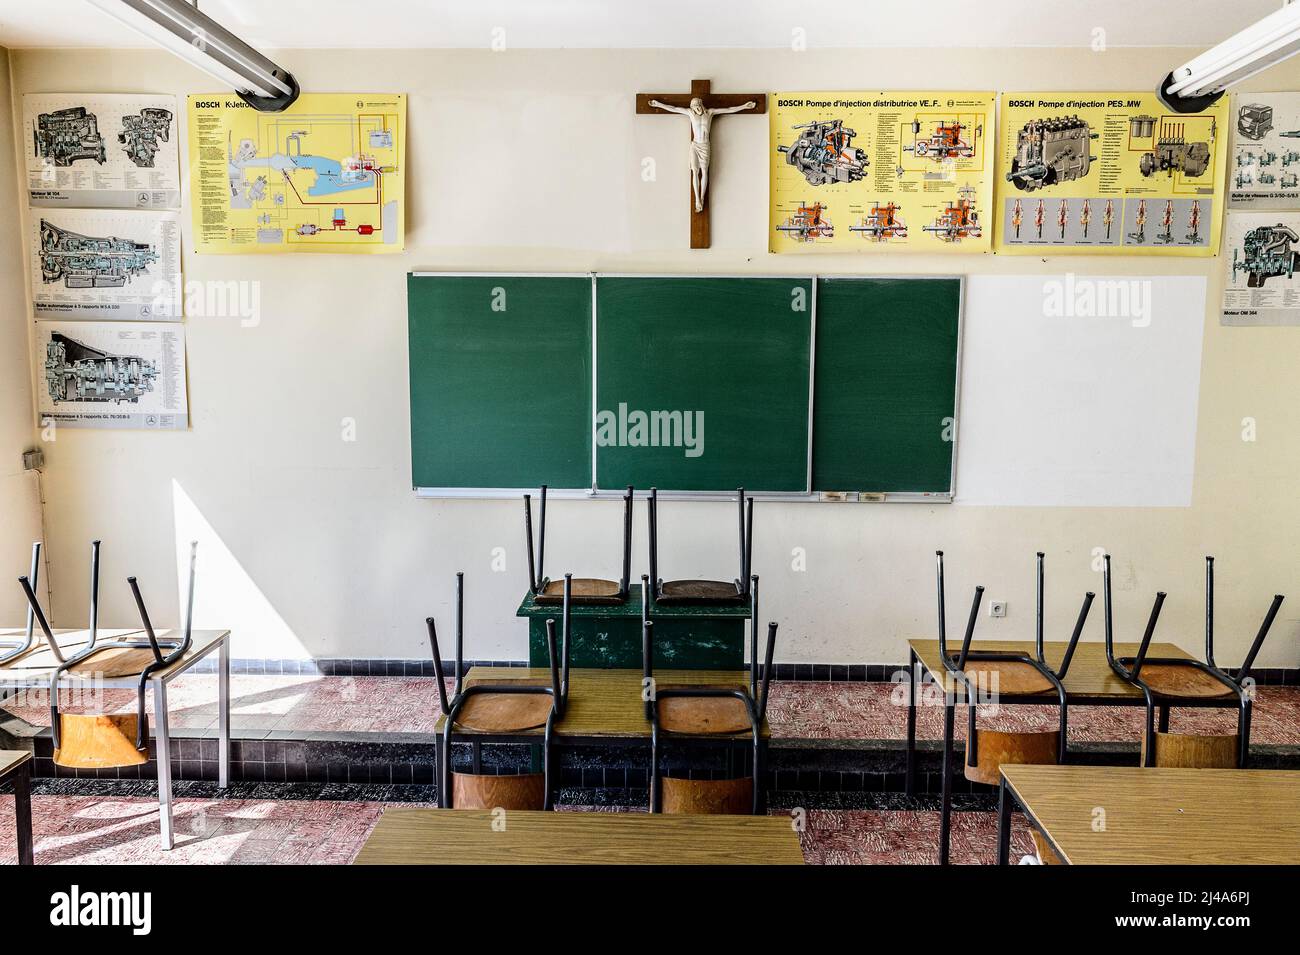 Insegnamento cattolico - croce cristiana appesa al muro di una classe | enseignement catholique - le christ en croix pendu au mur d'une classe Foto Stock